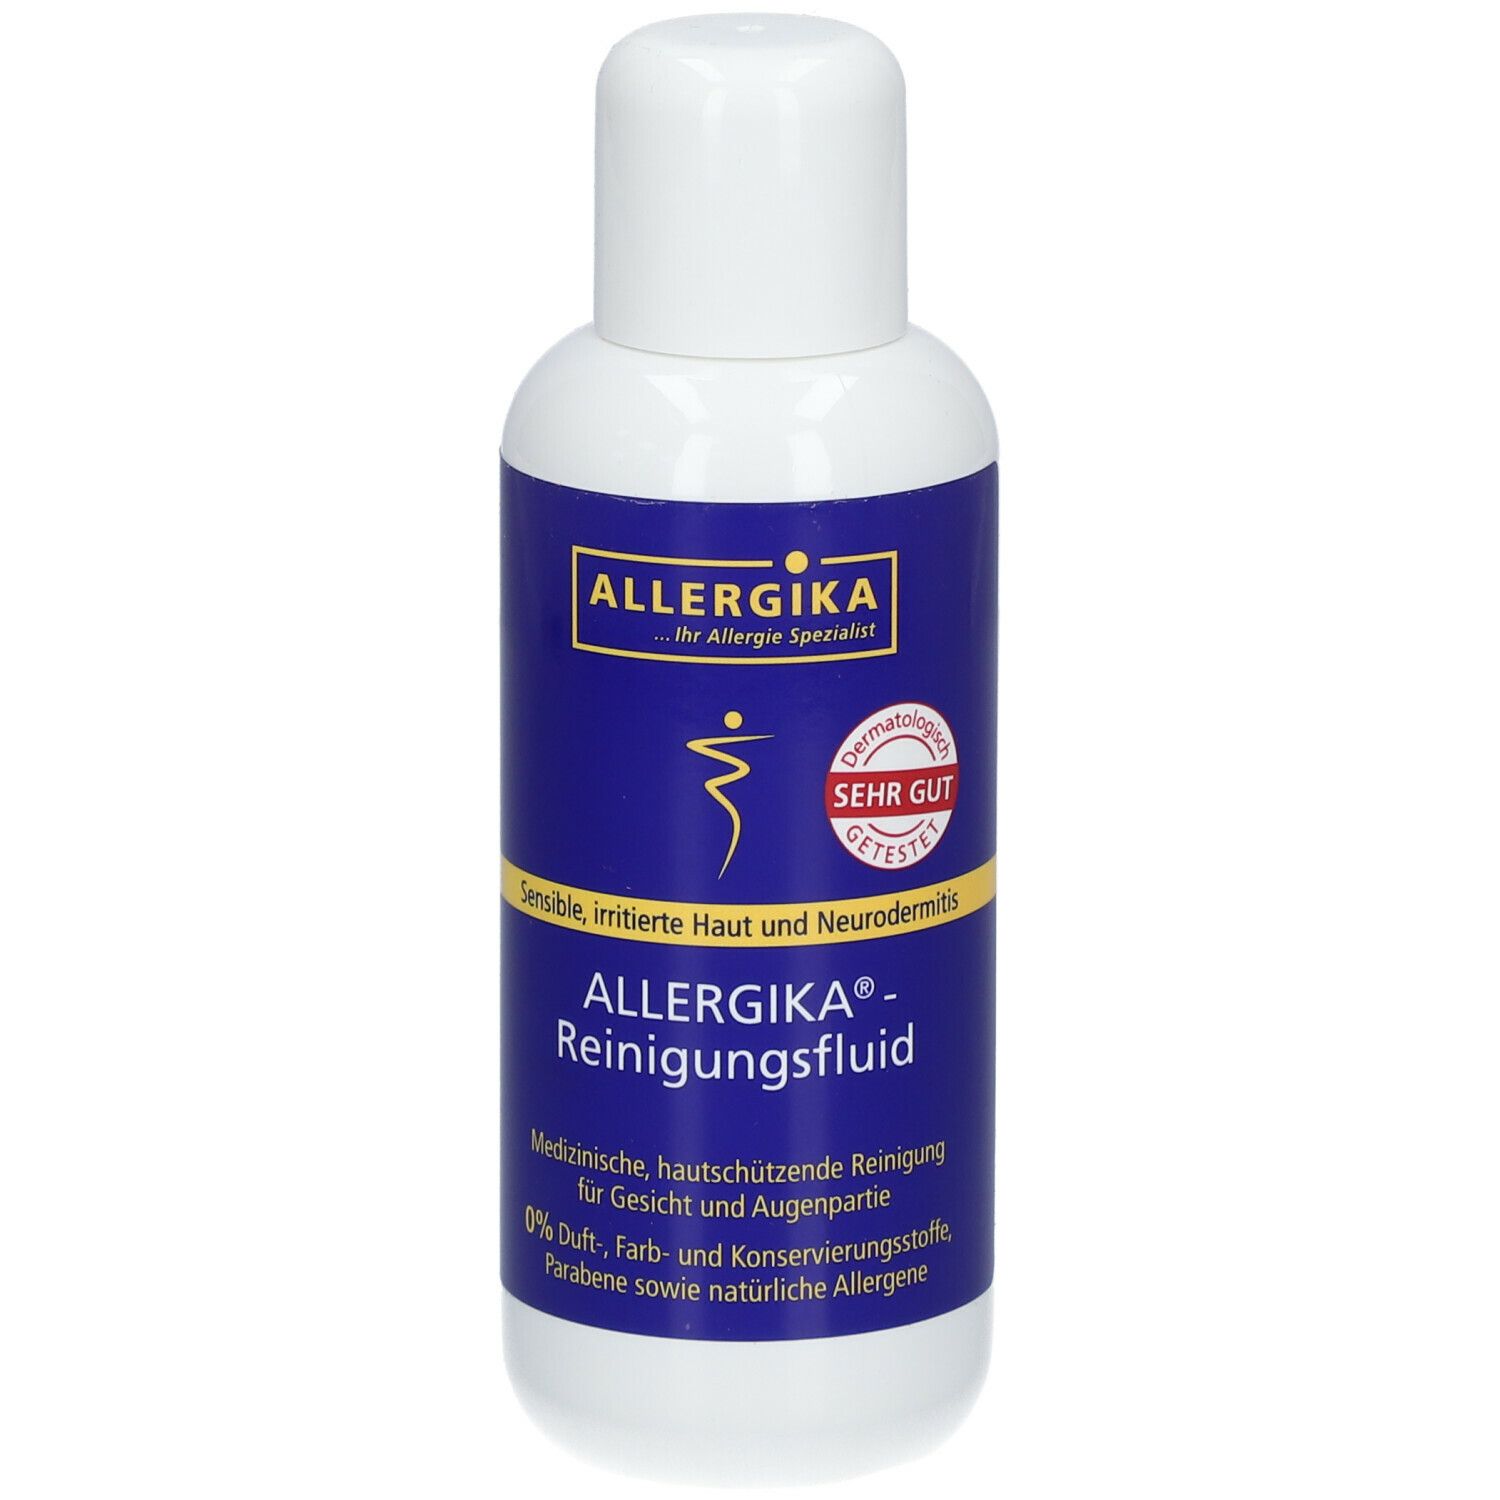 Image of ALLERGIKA® Reinigungs Fluid